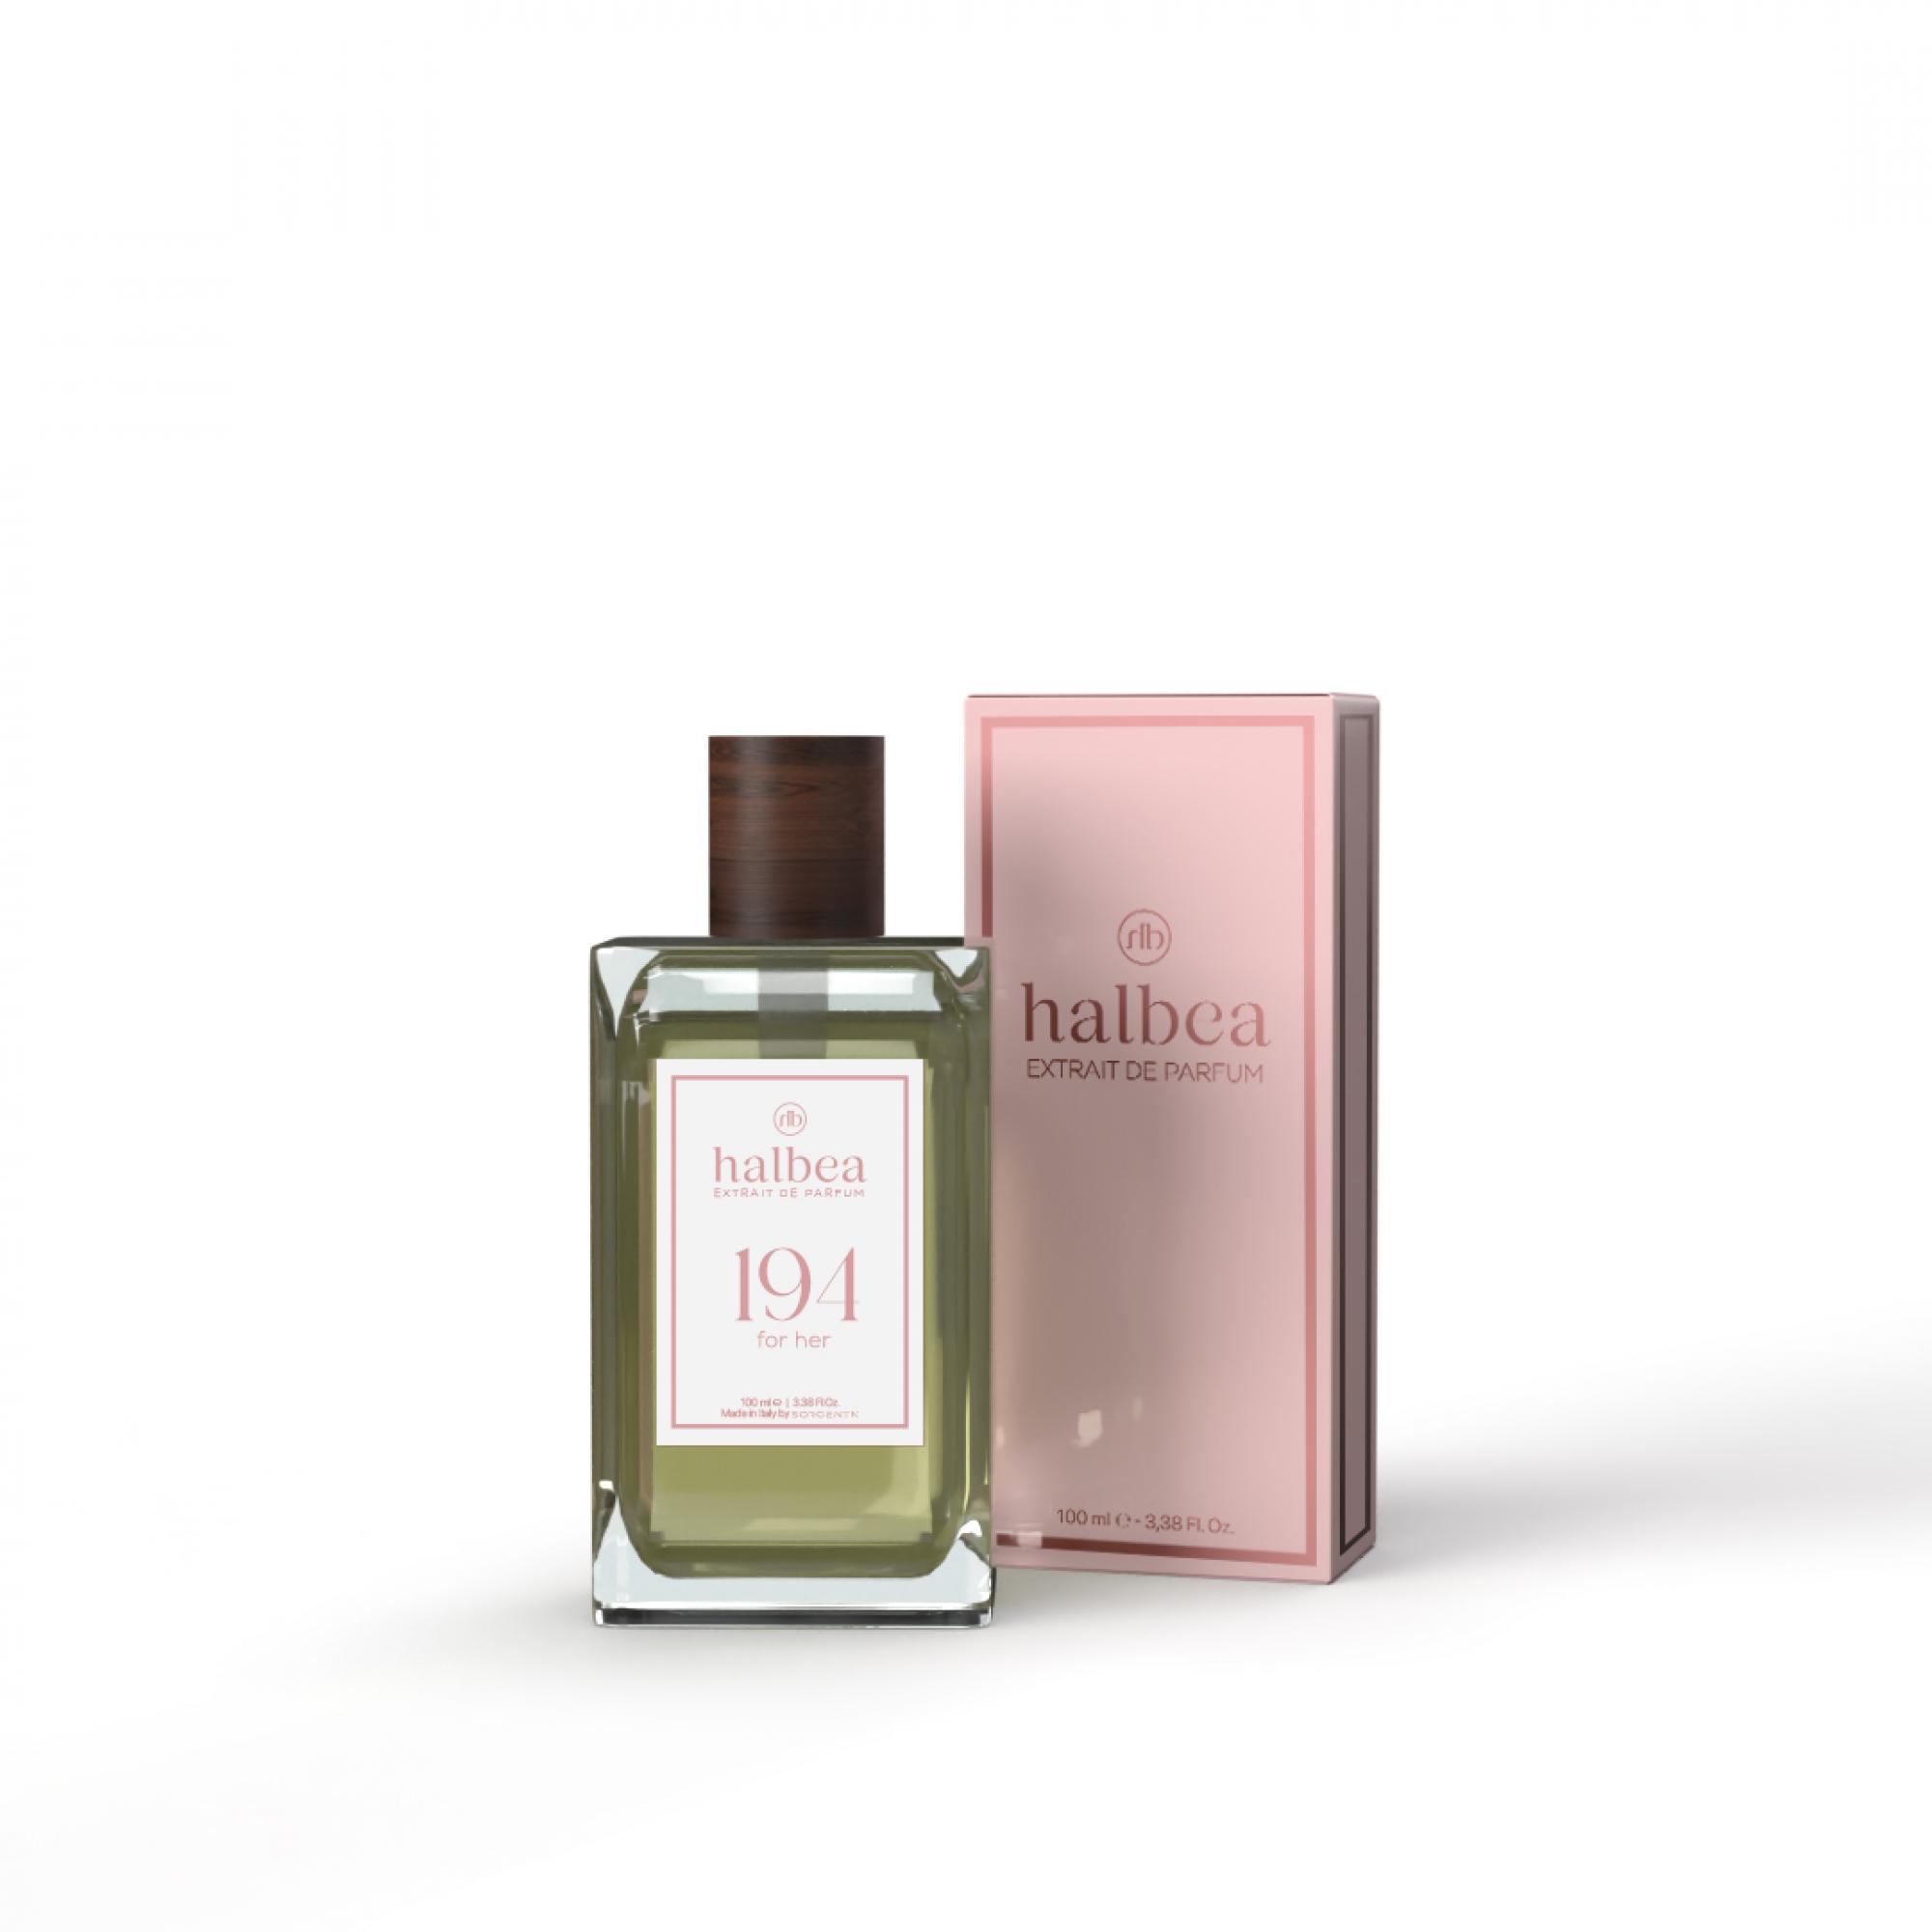 Halbea Parfum Nr. 194 insp. by Dior Miss Dior Chérie Sorgenta 100ml